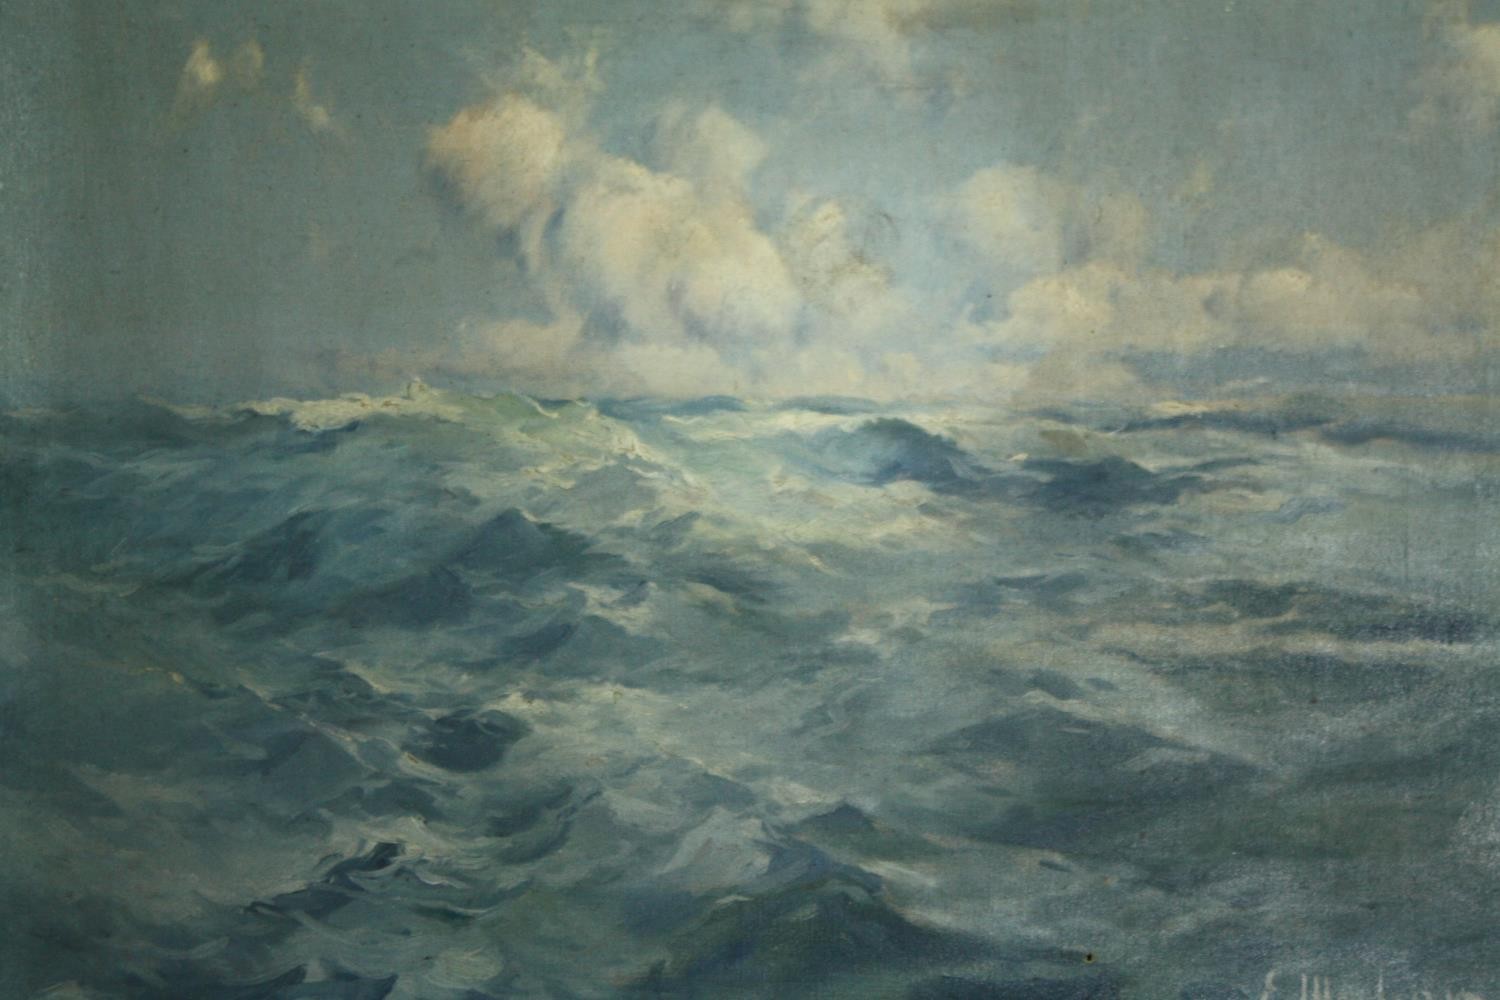 Elieu Meifren y Roig (1859-1940), oil on canvas, seascape, waves, signed. H.88 W.67cm.